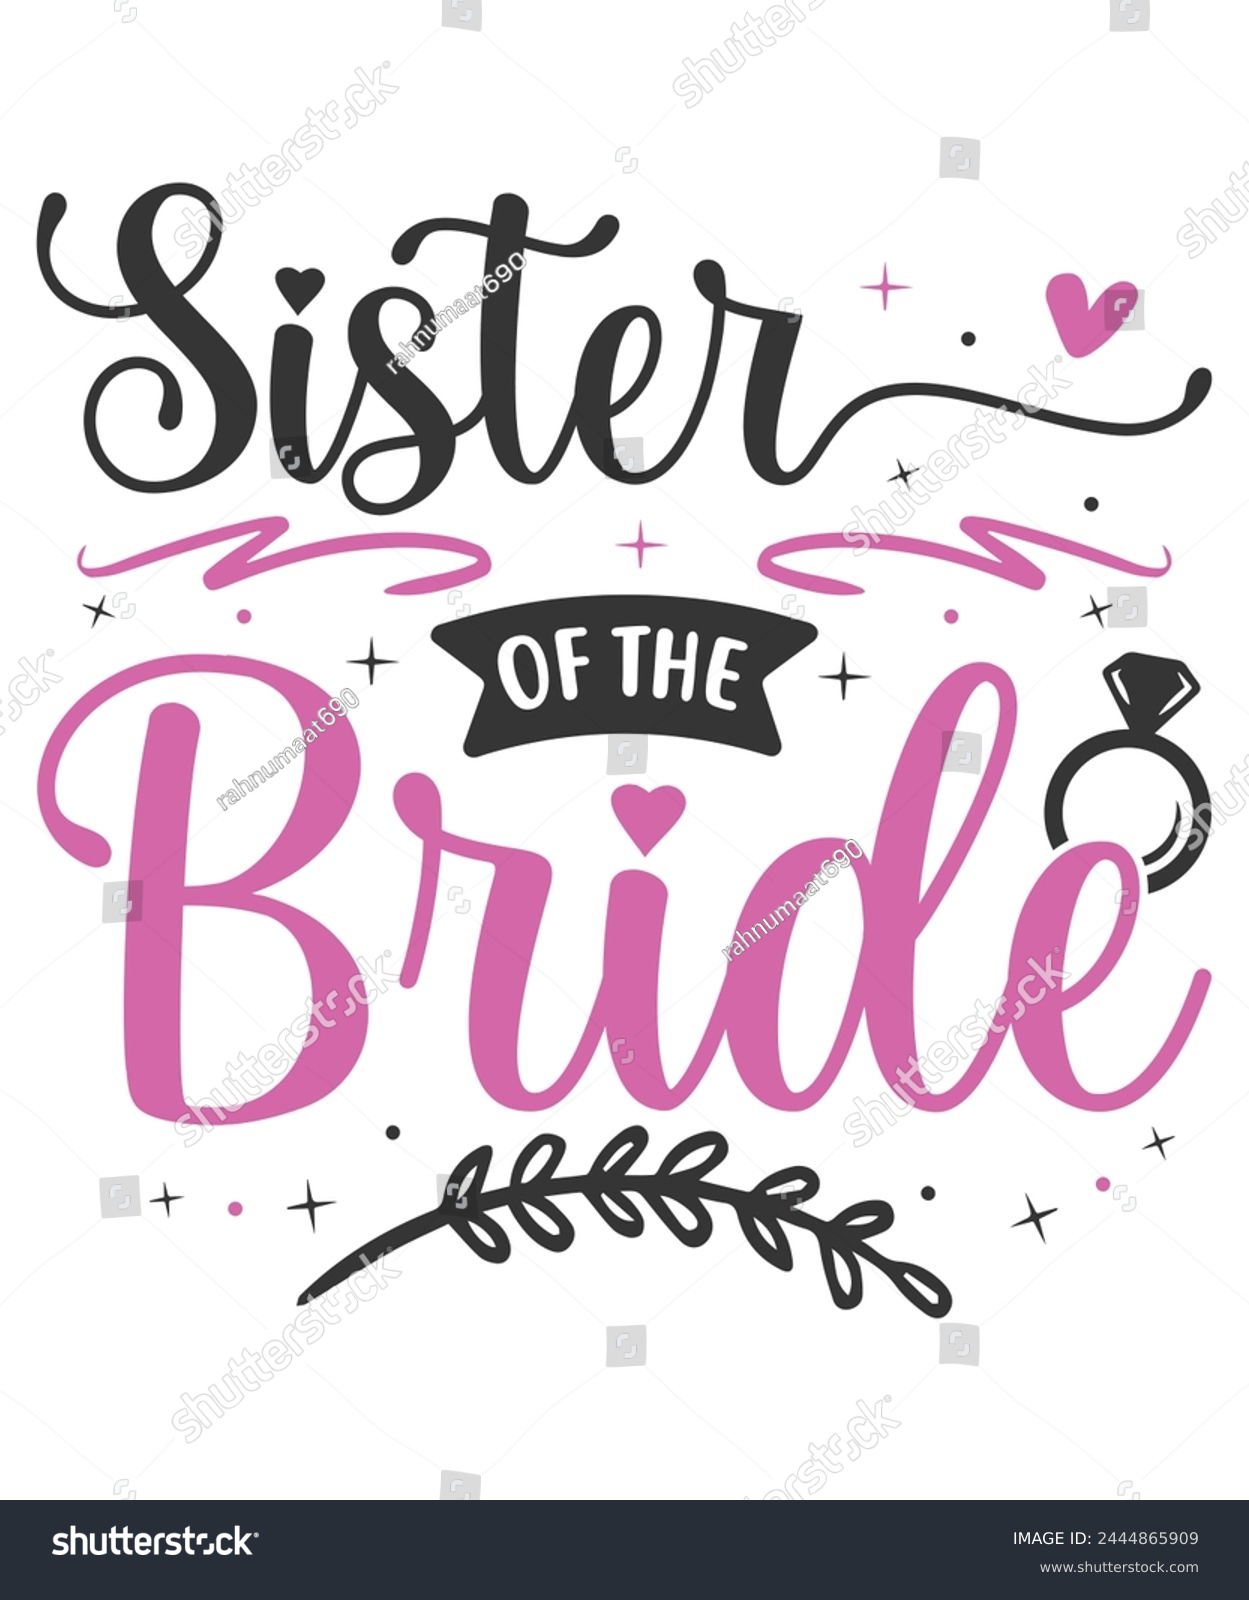 SVG of Sister of the bride wedding bride groom svg